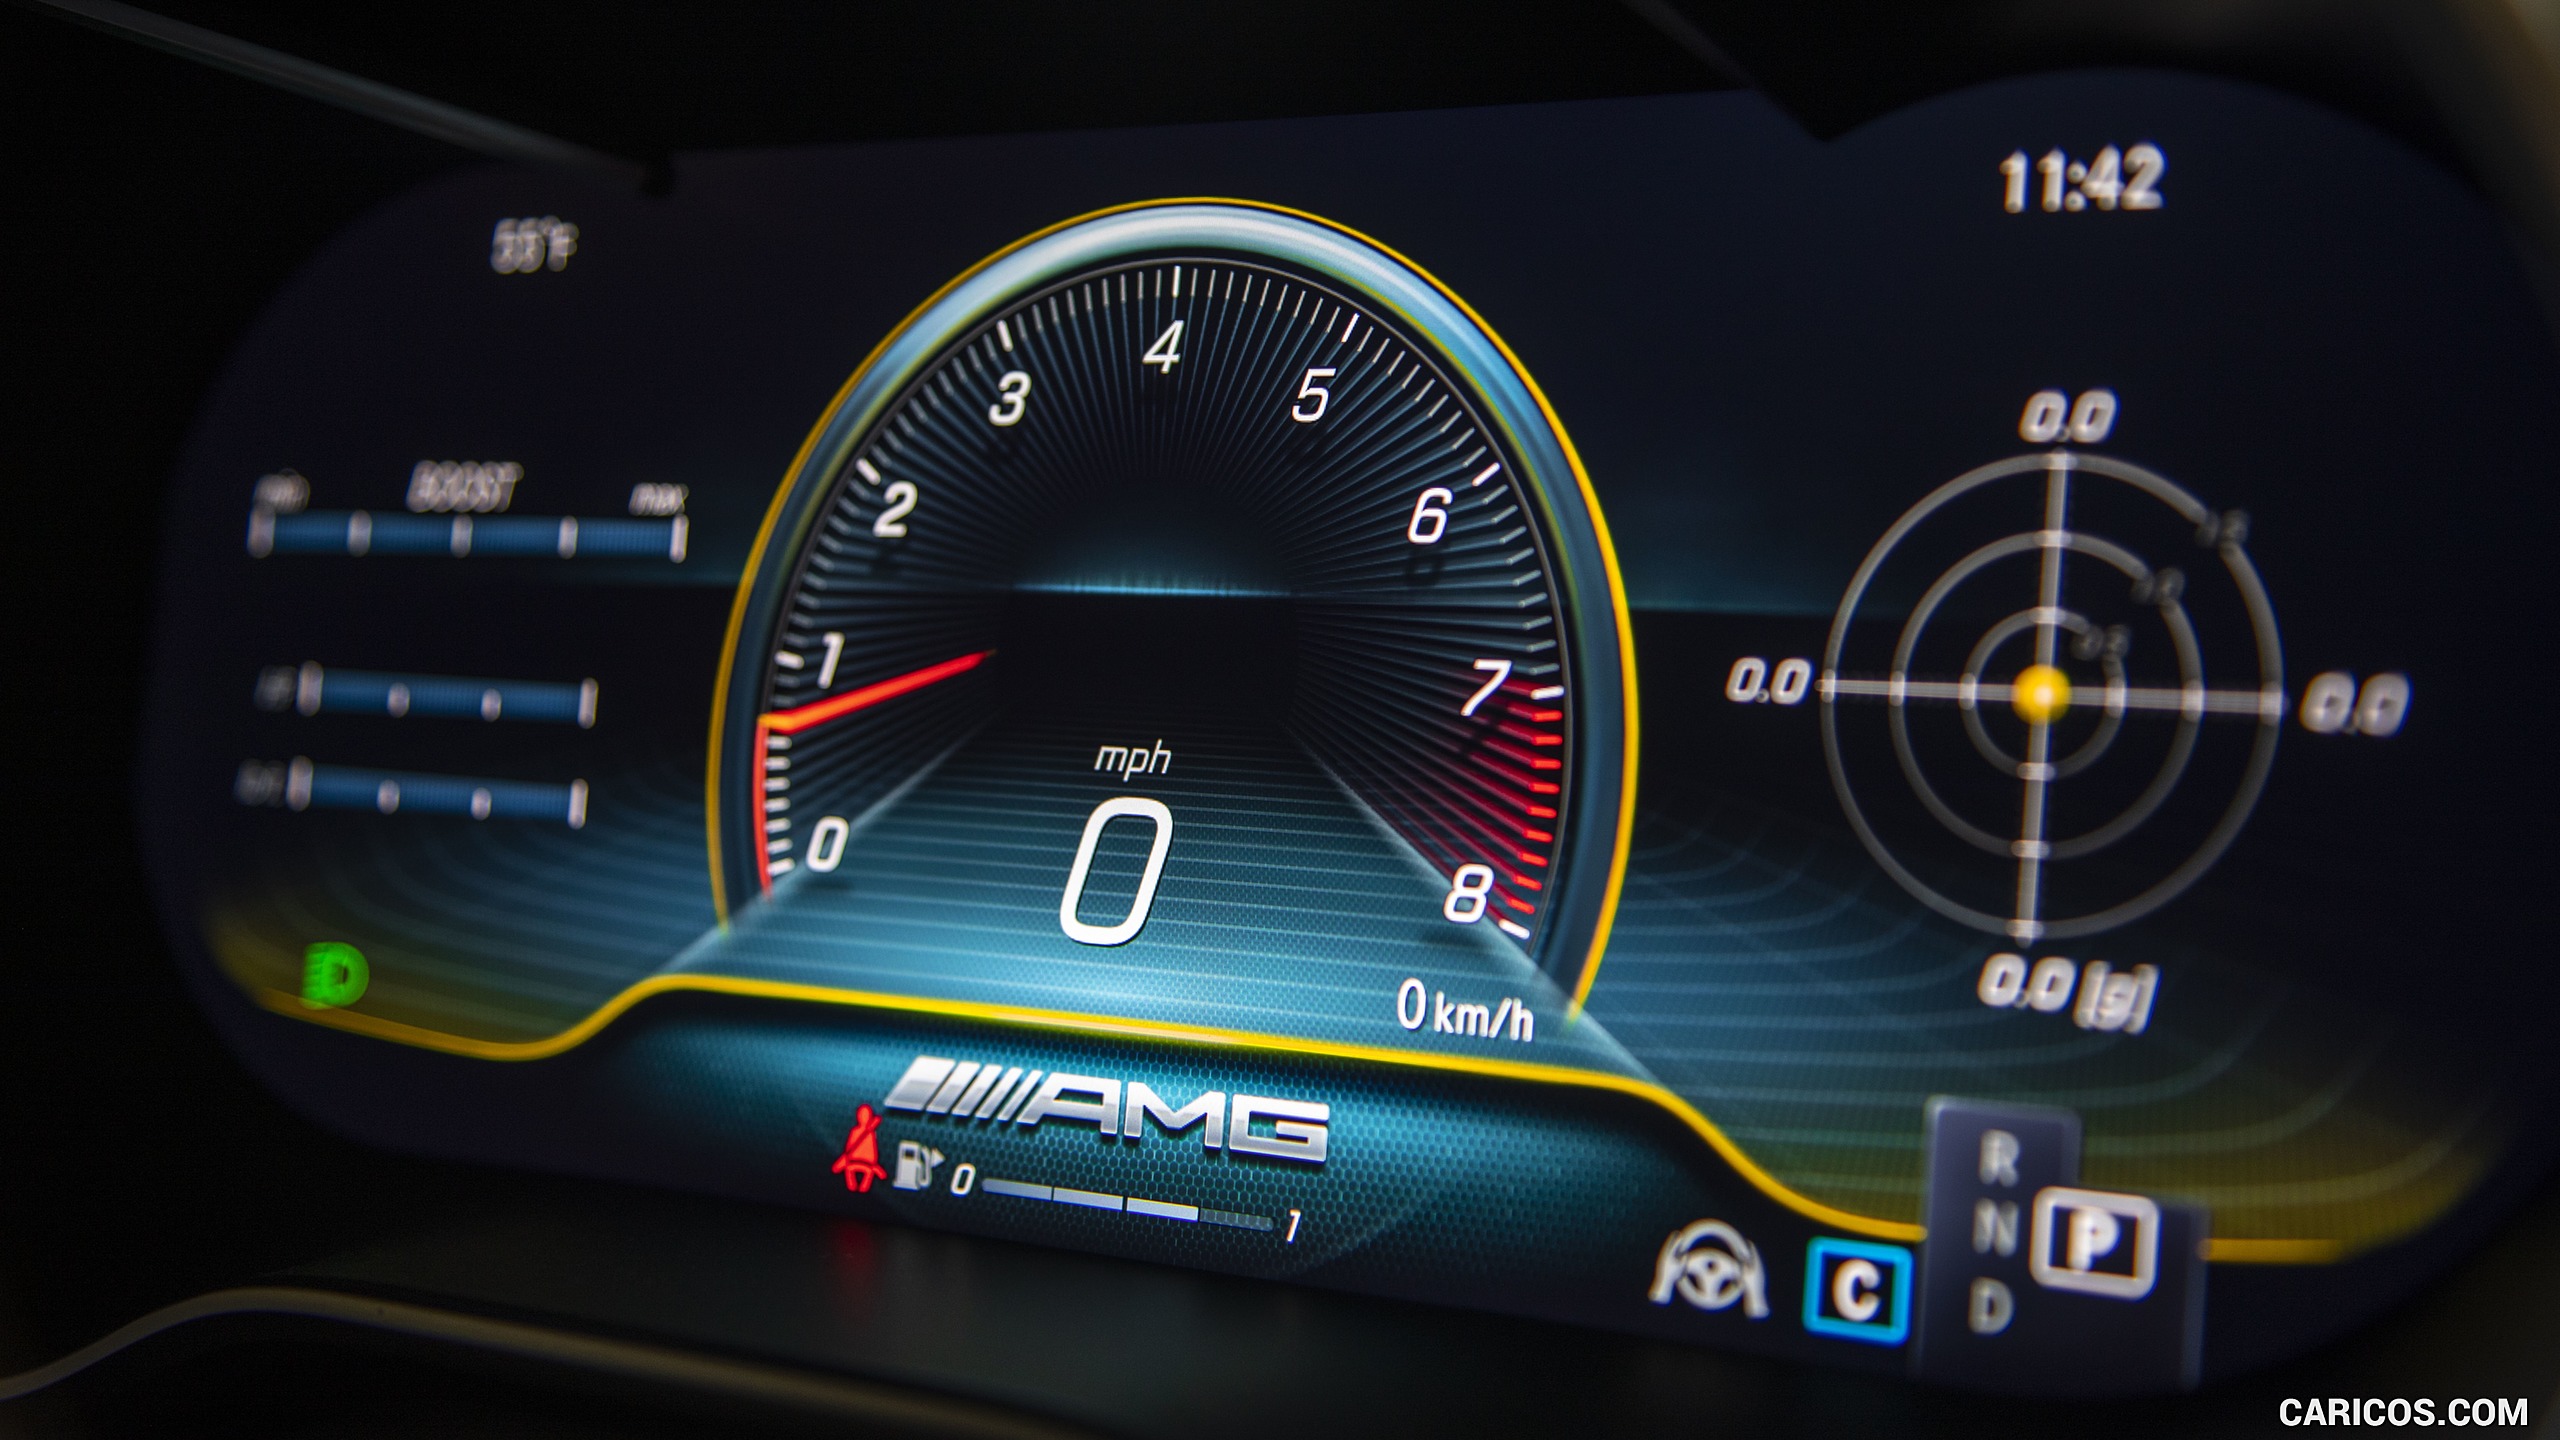 2019 Mercedes-AMG C63 S Sedan (US-Sedan) - Digital Instrument Cluster, #108 of 115